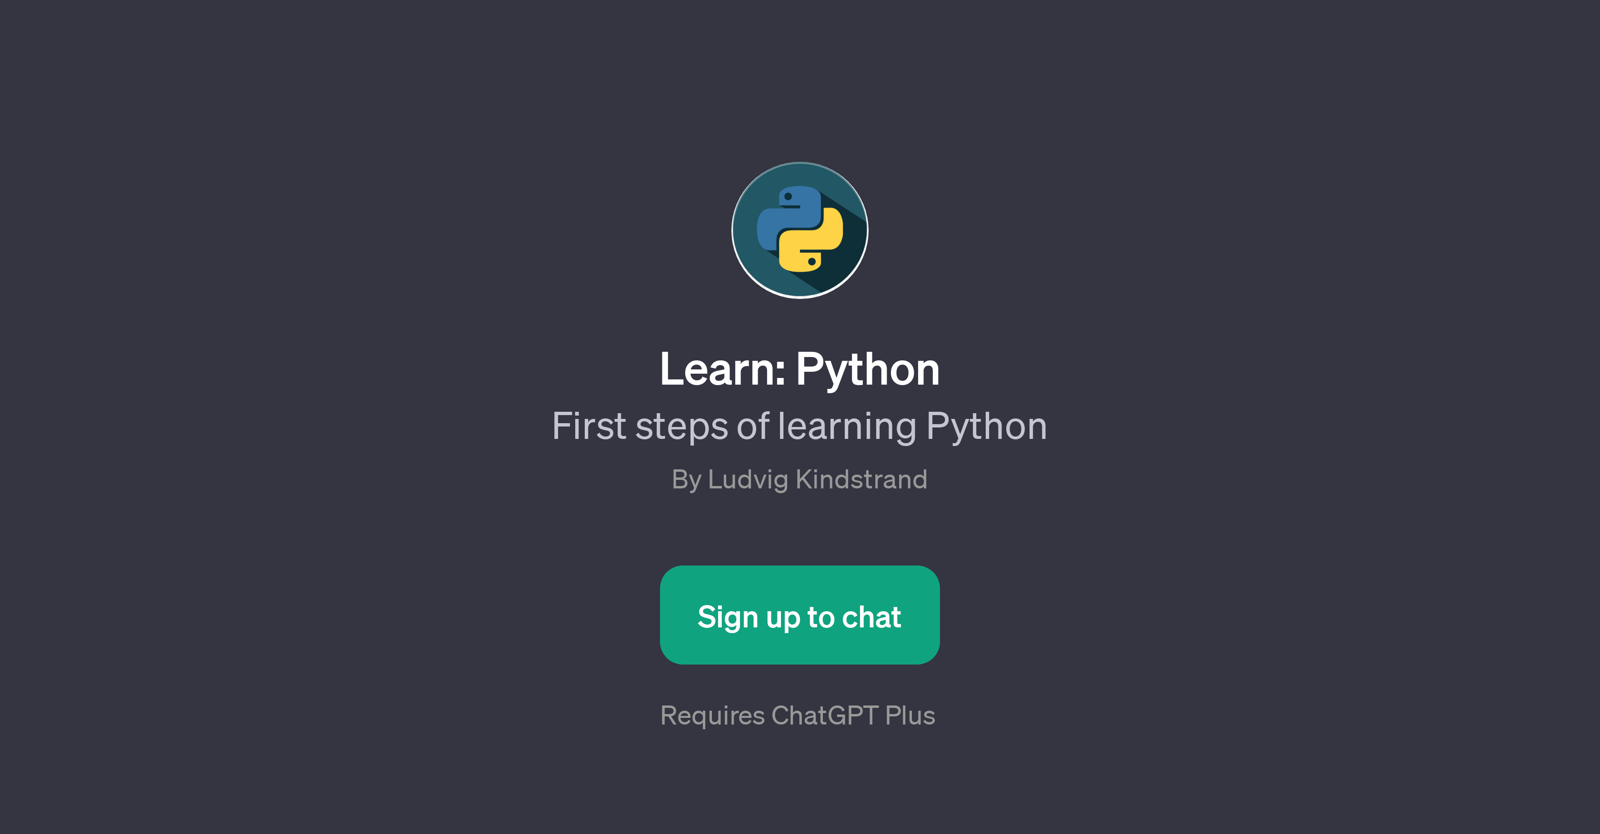 Learn: Python website